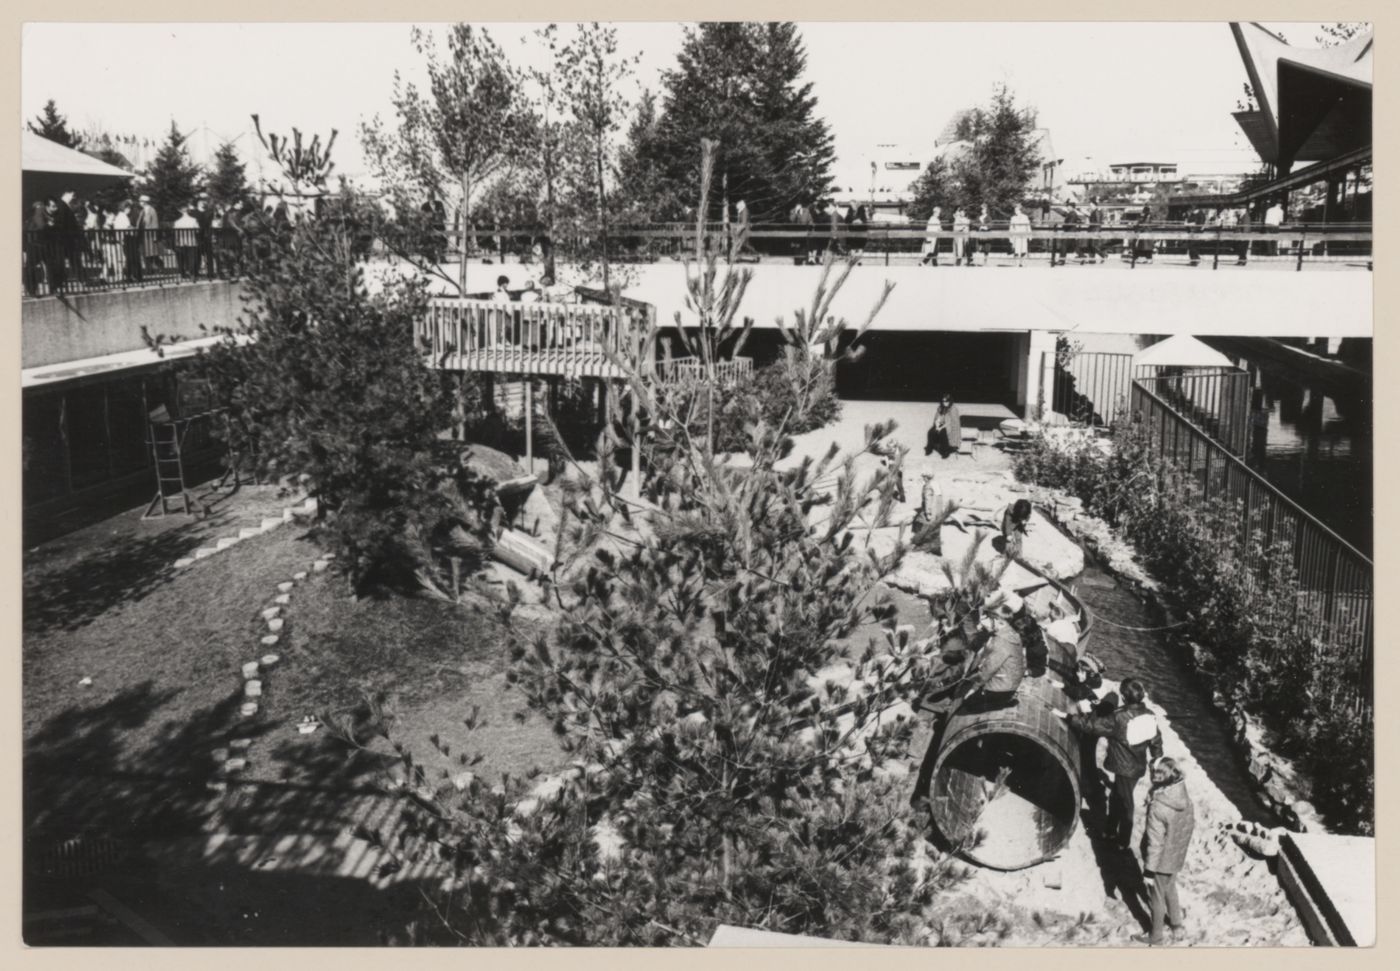 View of Children's Creative Centre Playground, Canadian Federal Pavilion, Expo '67, Montréal, Québec